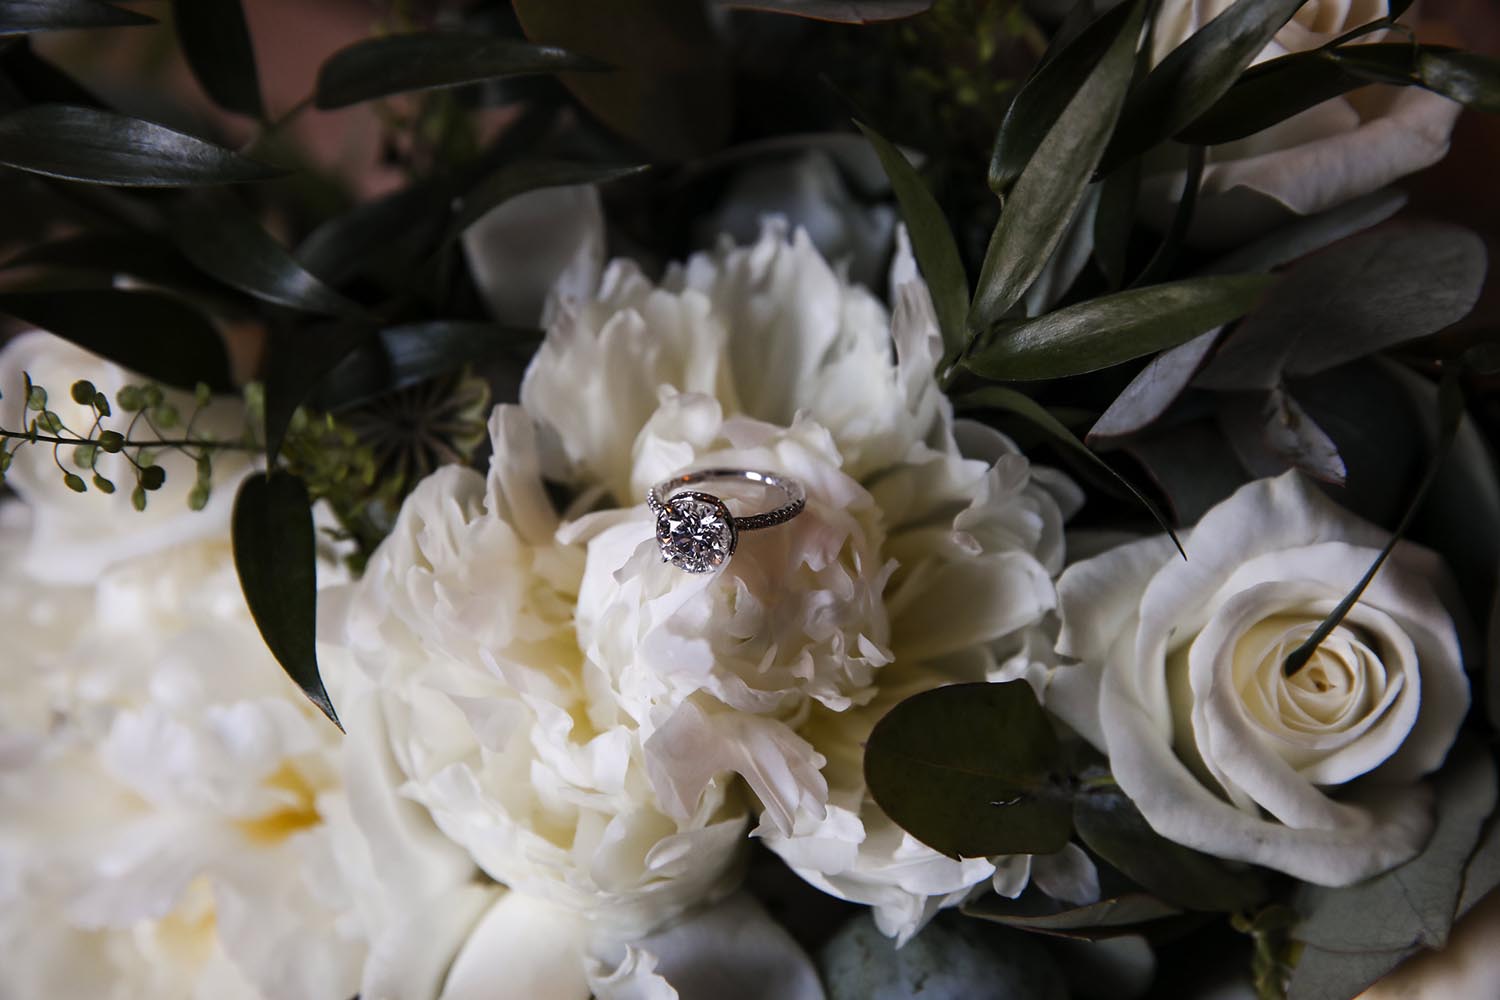 Engagement ring set against flowers